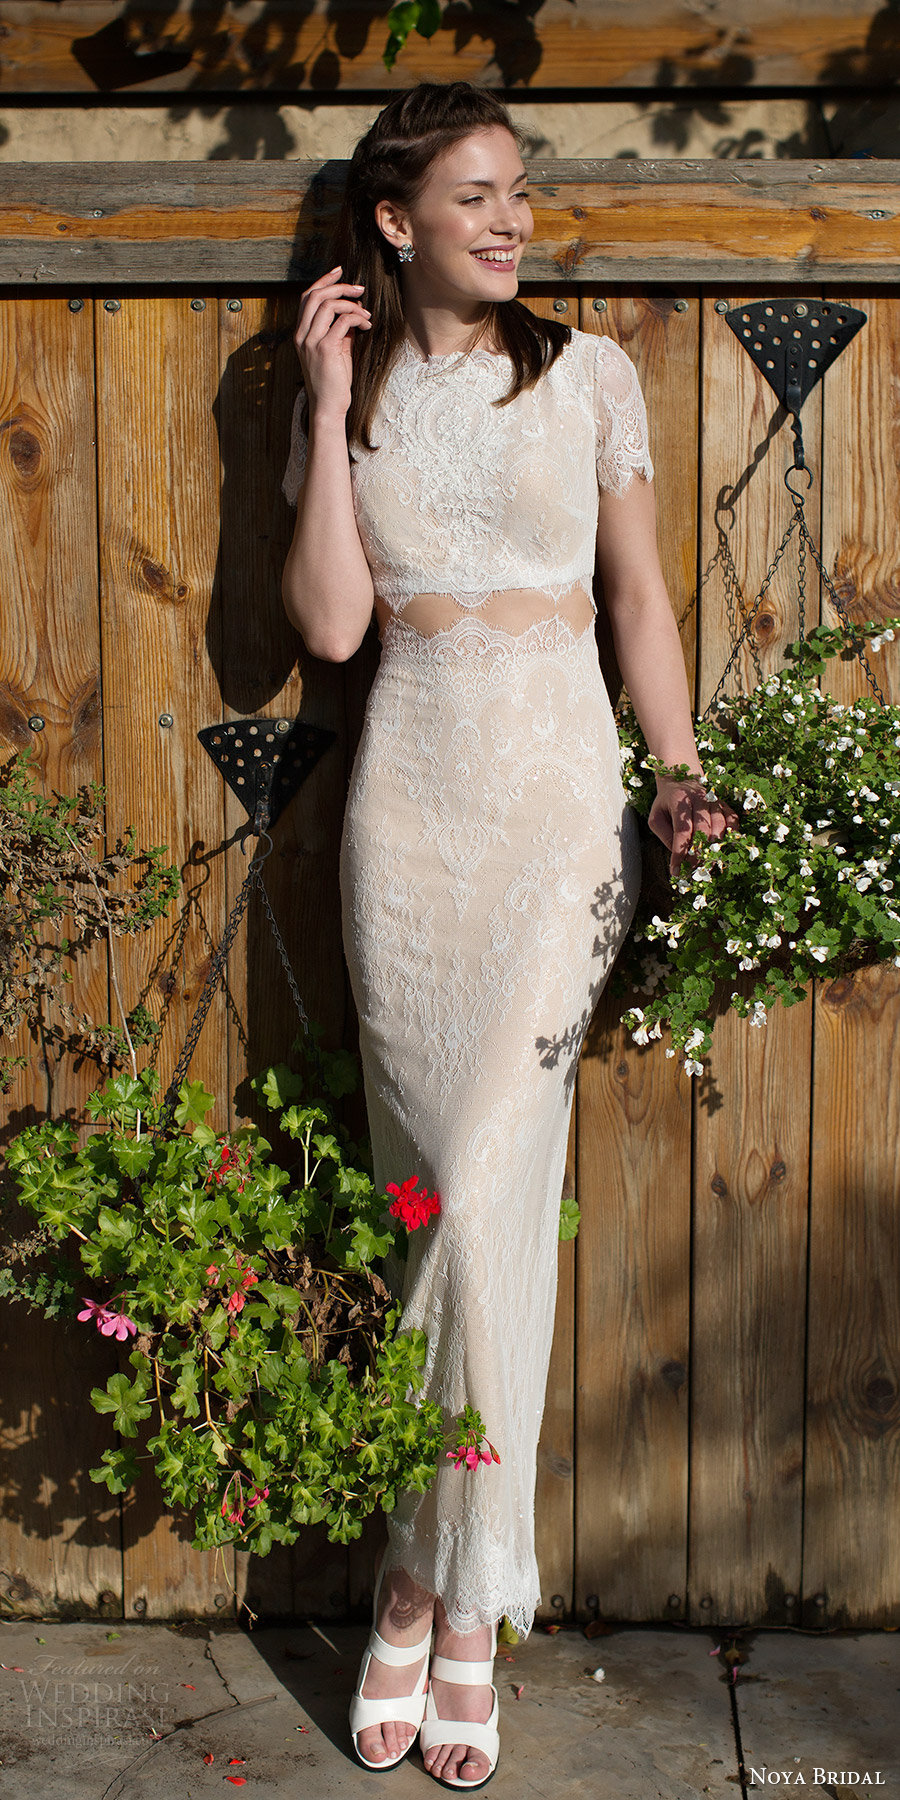 noya bridal 2016 short sleeves jewel neck sheath lace wedding dress (1213) mv edgy crop top